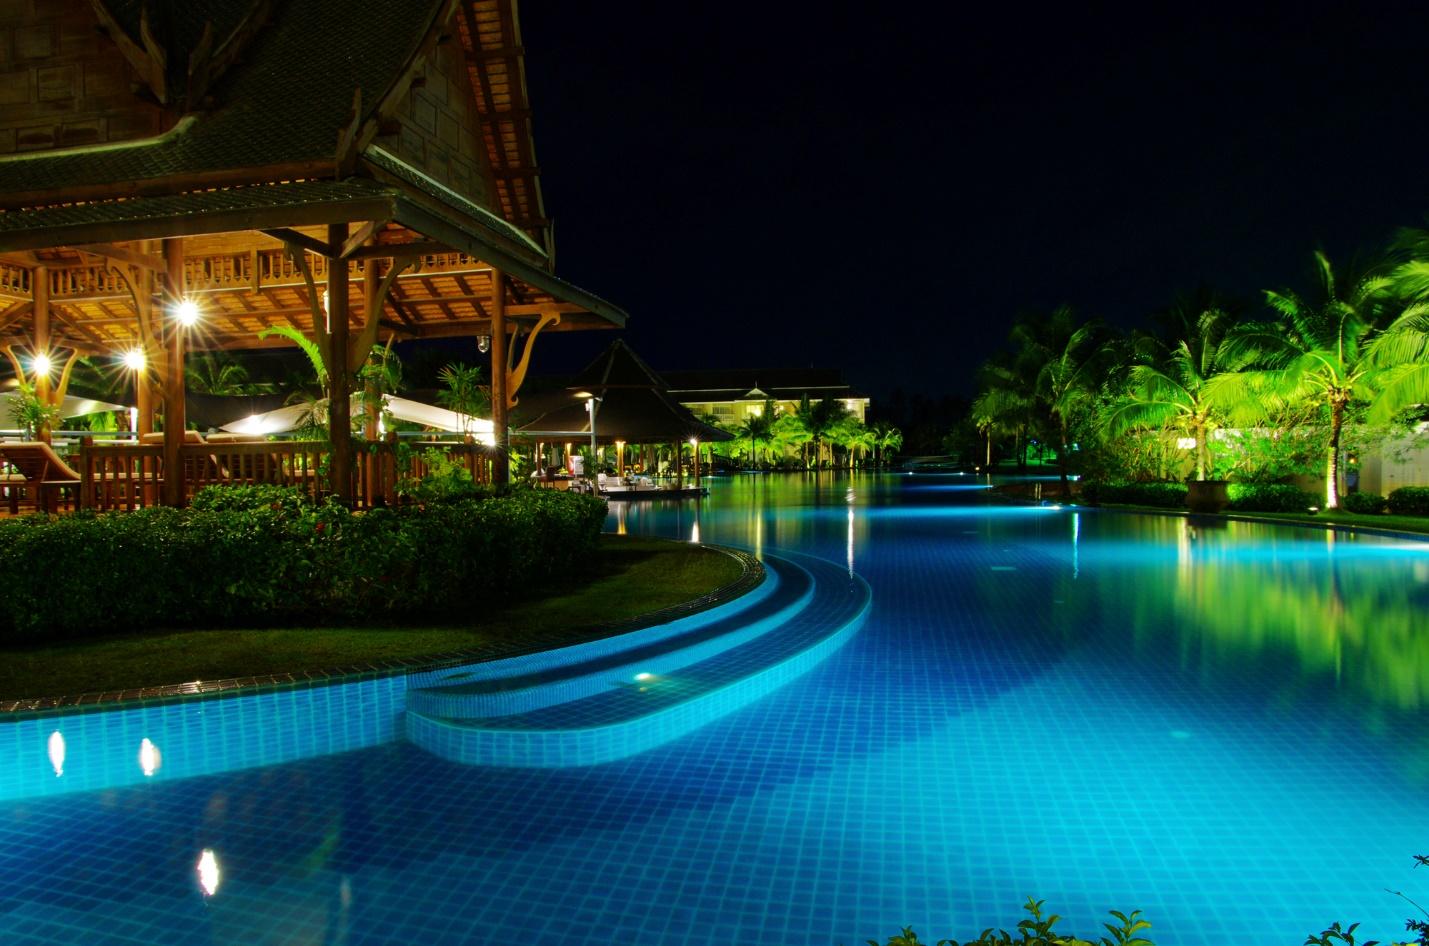 A pool at a resort in Thailand at night.